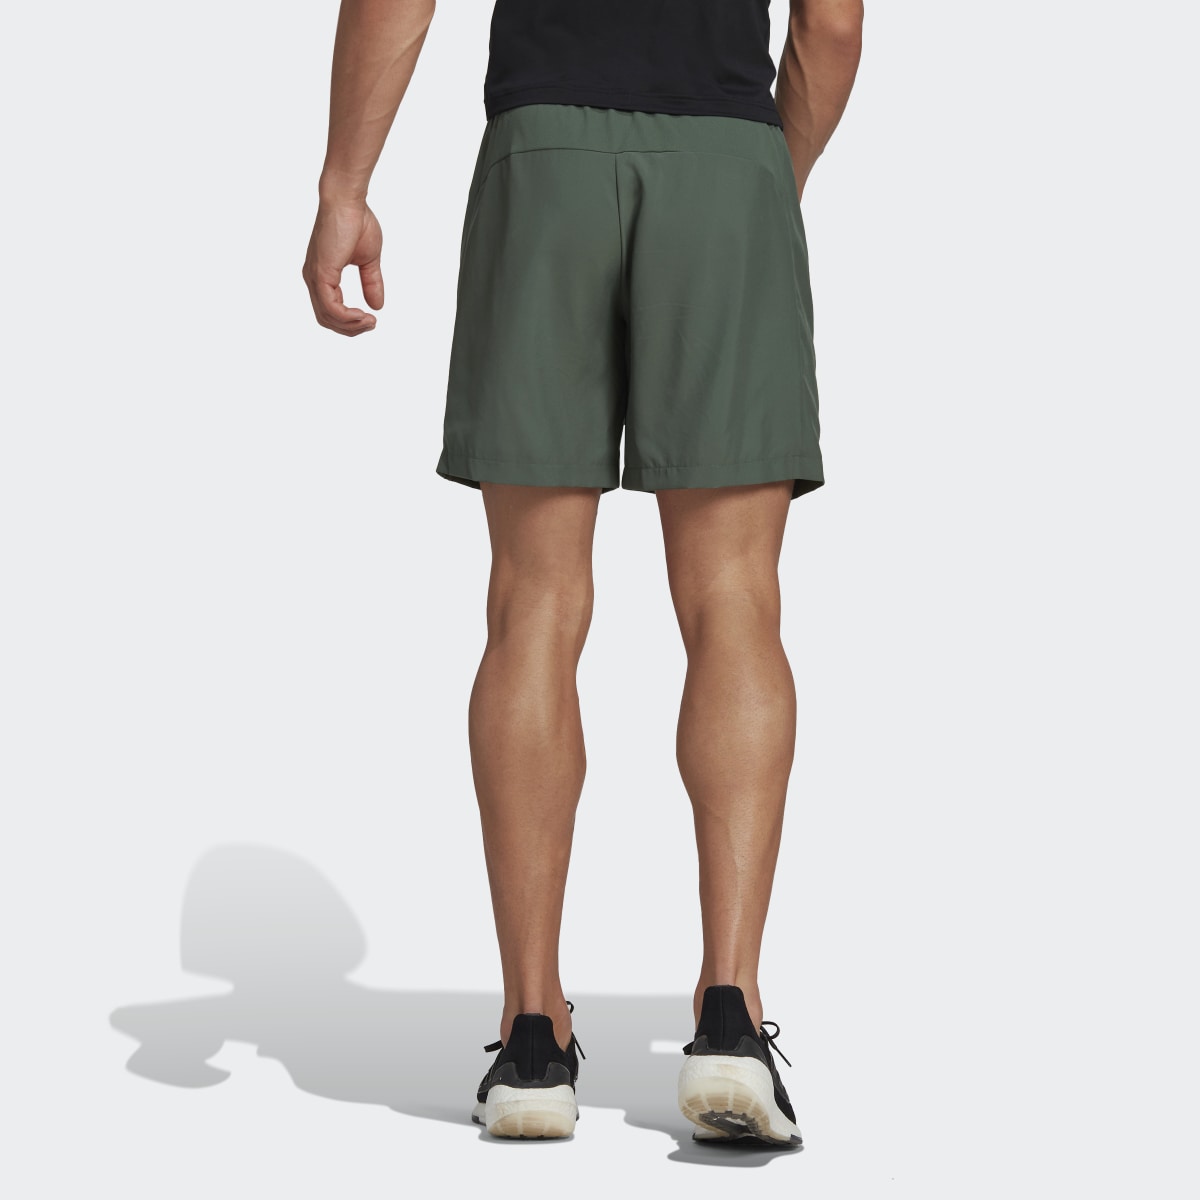 adidas AEROREADY Designed to Move Woven Sport Shorts - Black | Men's  Training | adidas US